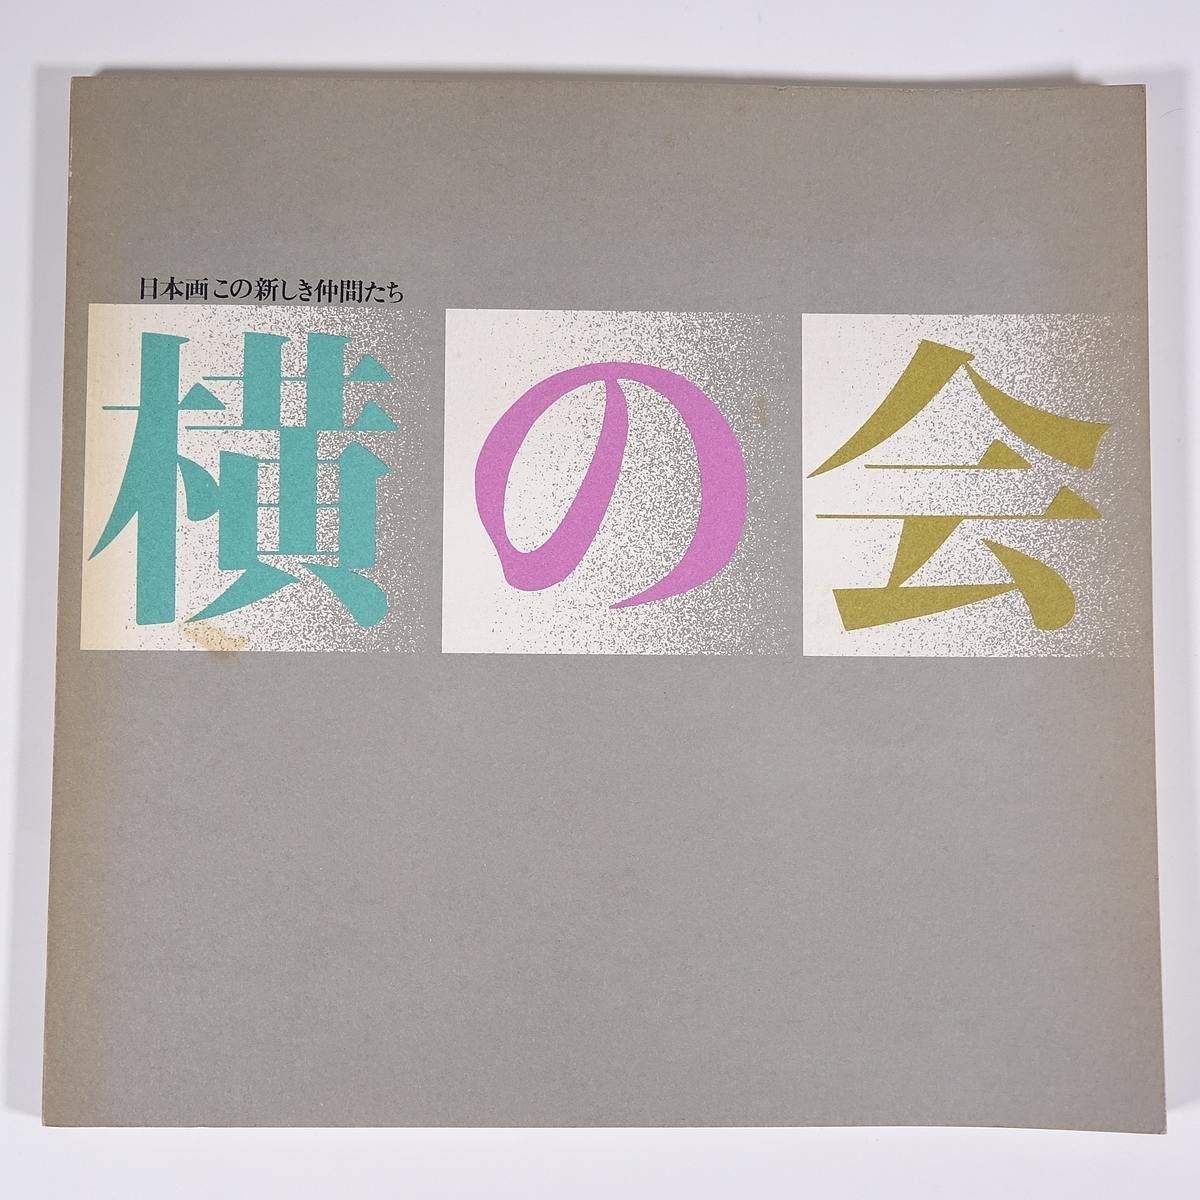 तीसरी योको-नो-काई प्रदर्शनी: जापानी पेंटिंग - ये नए दोस्त, सेइबू कला संग्रहालय, 1986, बड़े प्रारूप वाली पुस्तक, प्रदर्शनी, चित्र, सूची, कला, कला, चित्रकारी, कला पुस्तक, कार्यों का संग्रह, चित्रकारी, कला पुस्तक, संग्रह, सूची